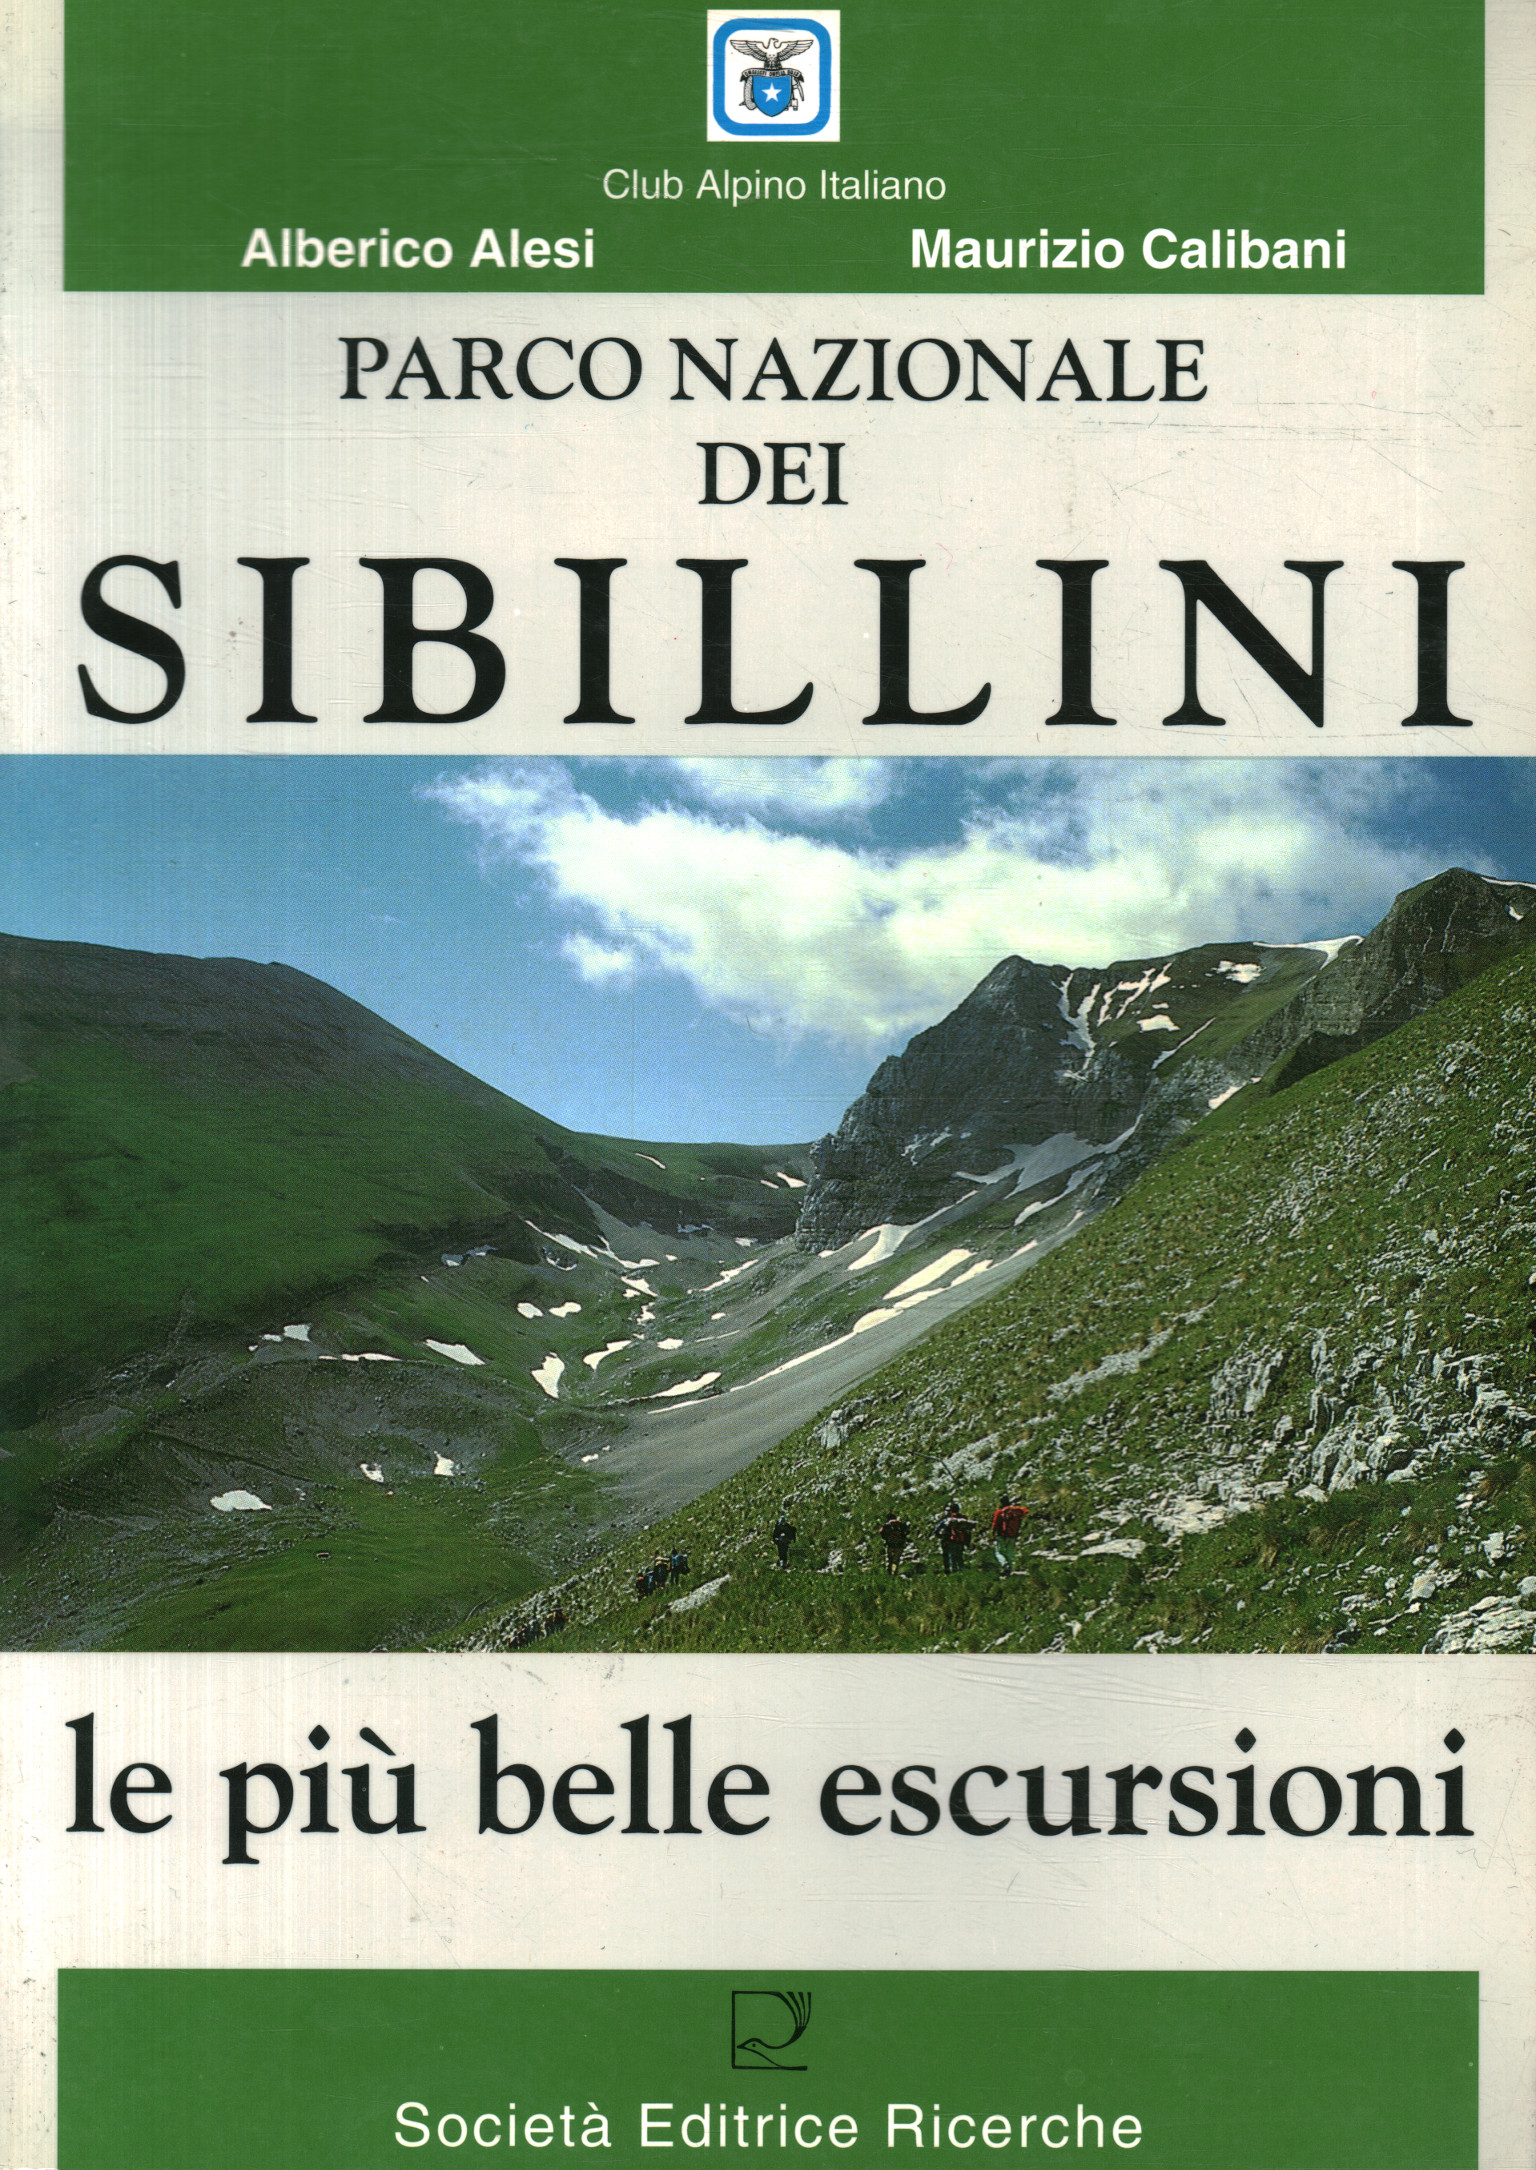 Sibillini National Park